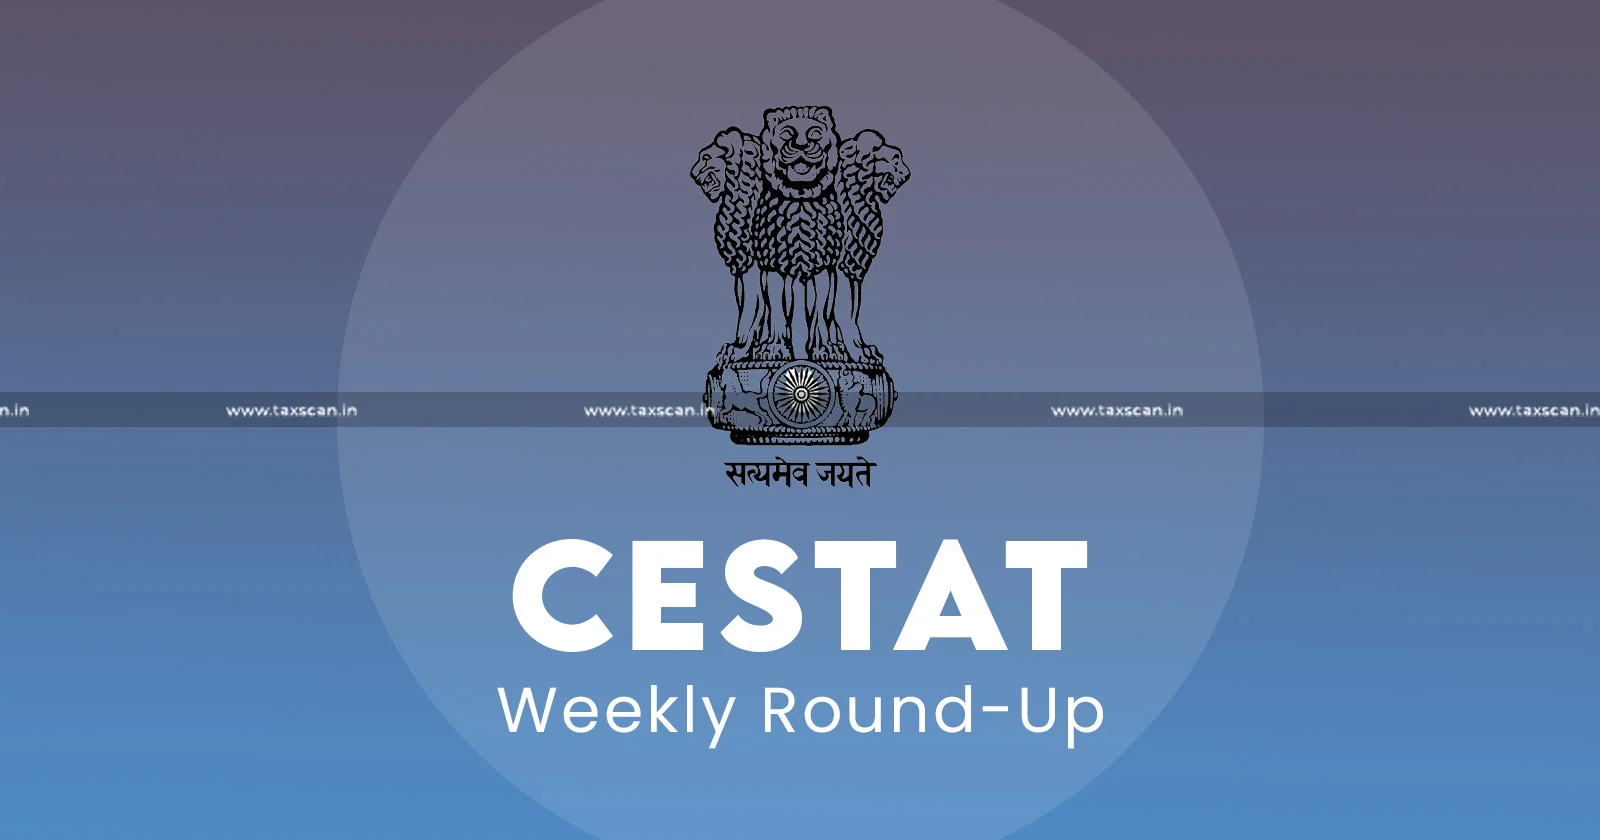 CESTAT-WEEKLY-ROUND-UP-CESTAT - Roundup -TAXSCAN